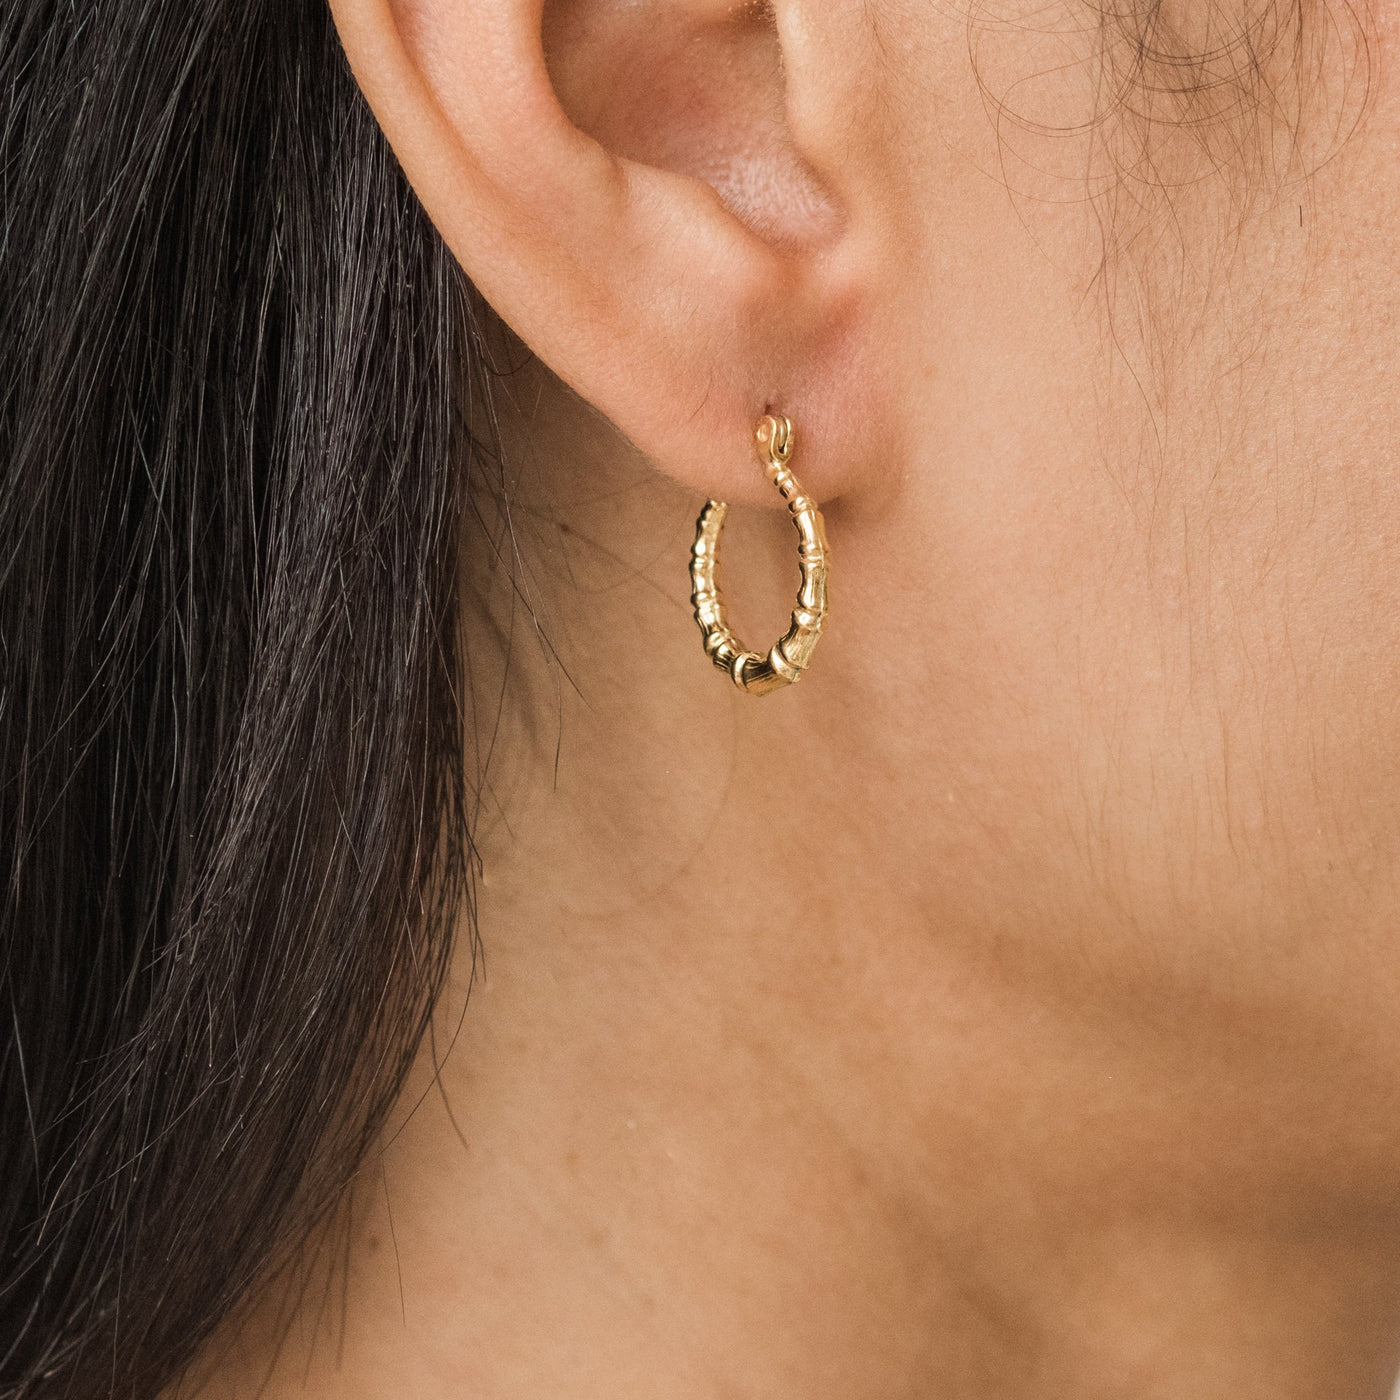 Tiny Bamboo Hoop Earrings | Simple & Dainty Jewelry